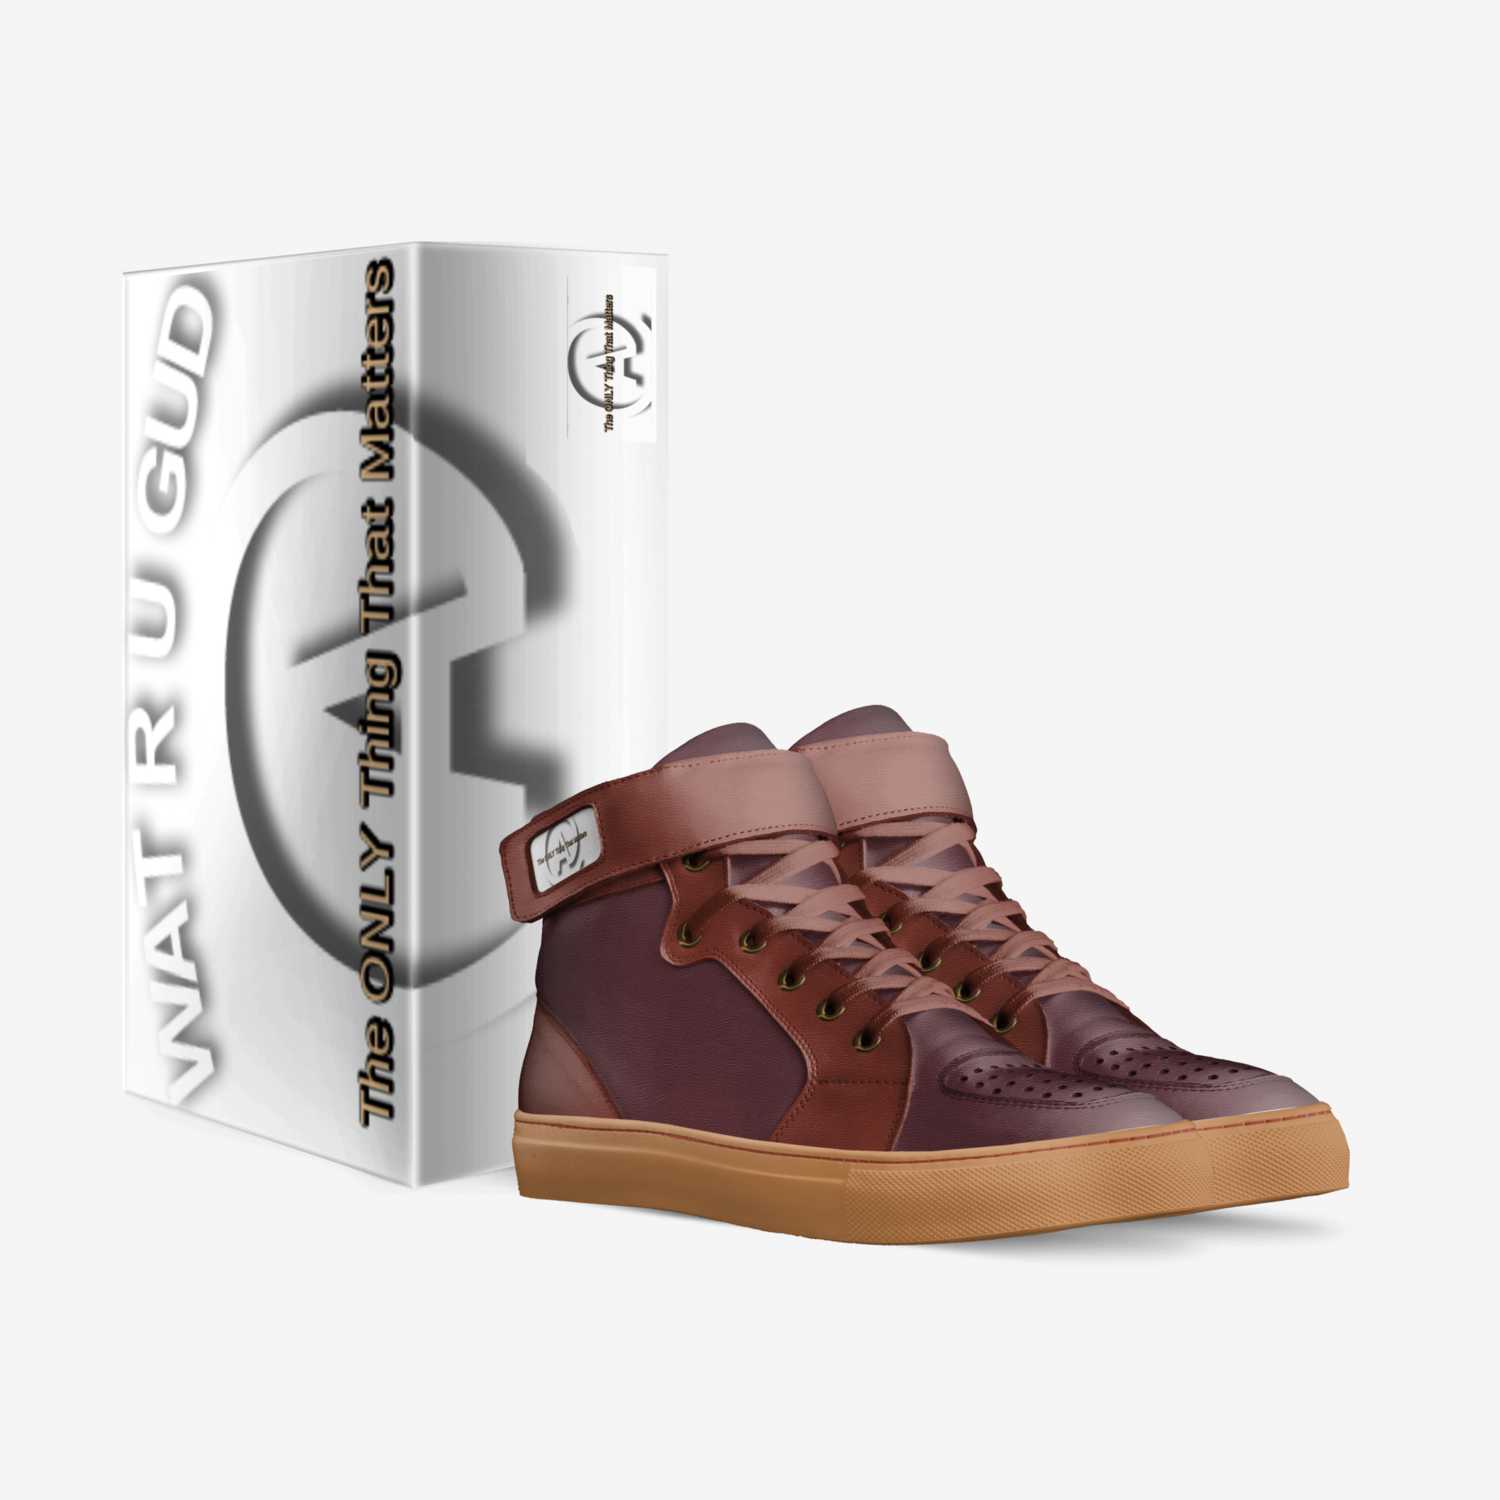 @ethr πT¢H®L H!gH™ custom made in Italy shoes by Dr. Watrugudat | Box view